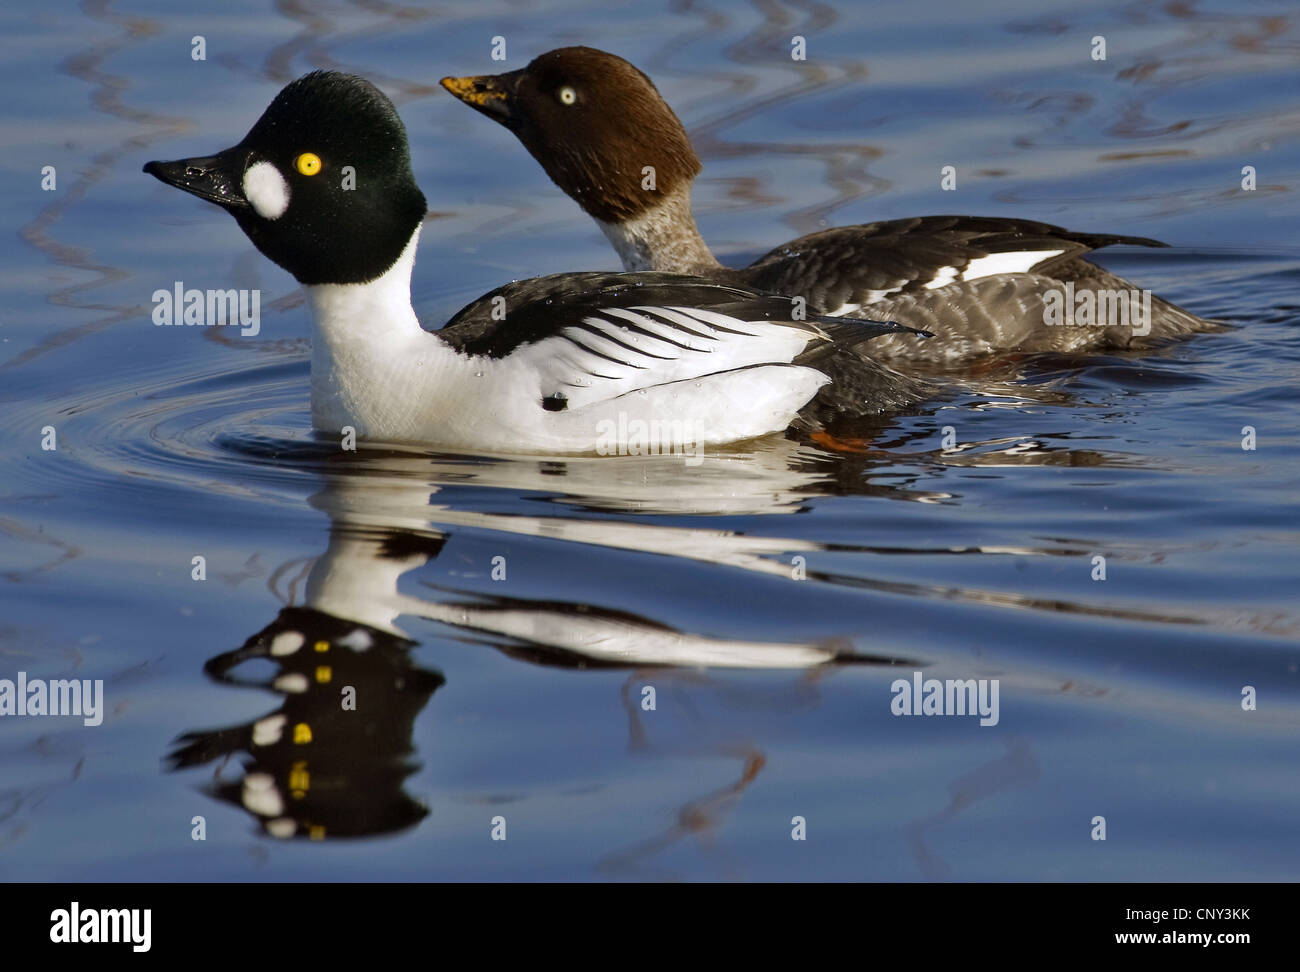 common goldeneye, goldeneye duckling (Bucephala clangula), swimming pair, Sweden, Lake Hornborga Stock Photo